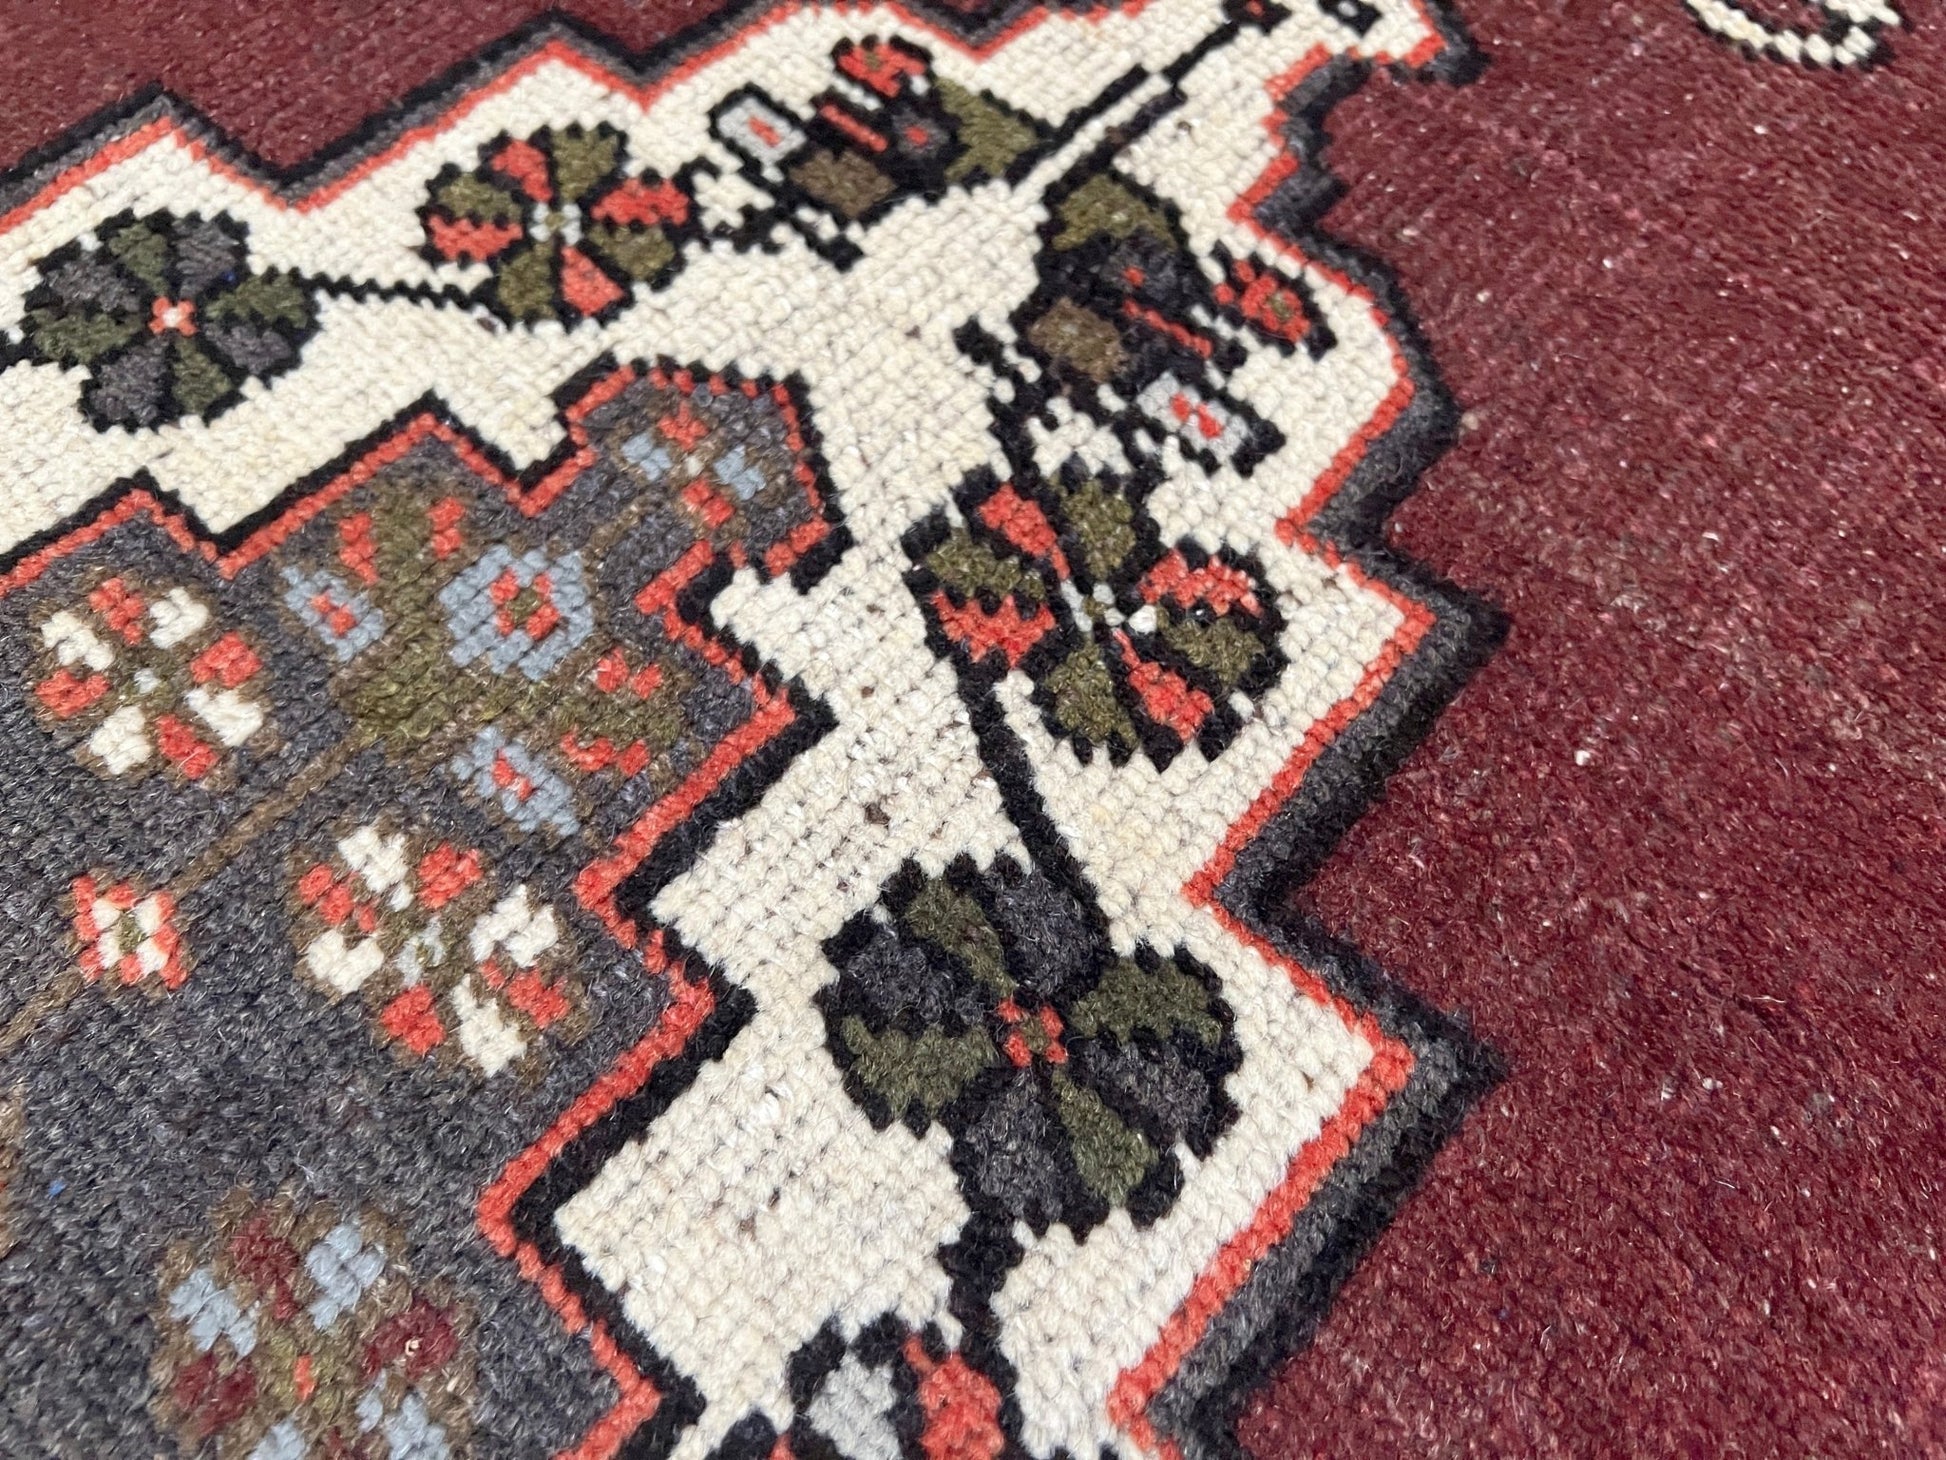 taspinar small handmade wool turkish rug shop san francisco bay area. Buy vintage rug online